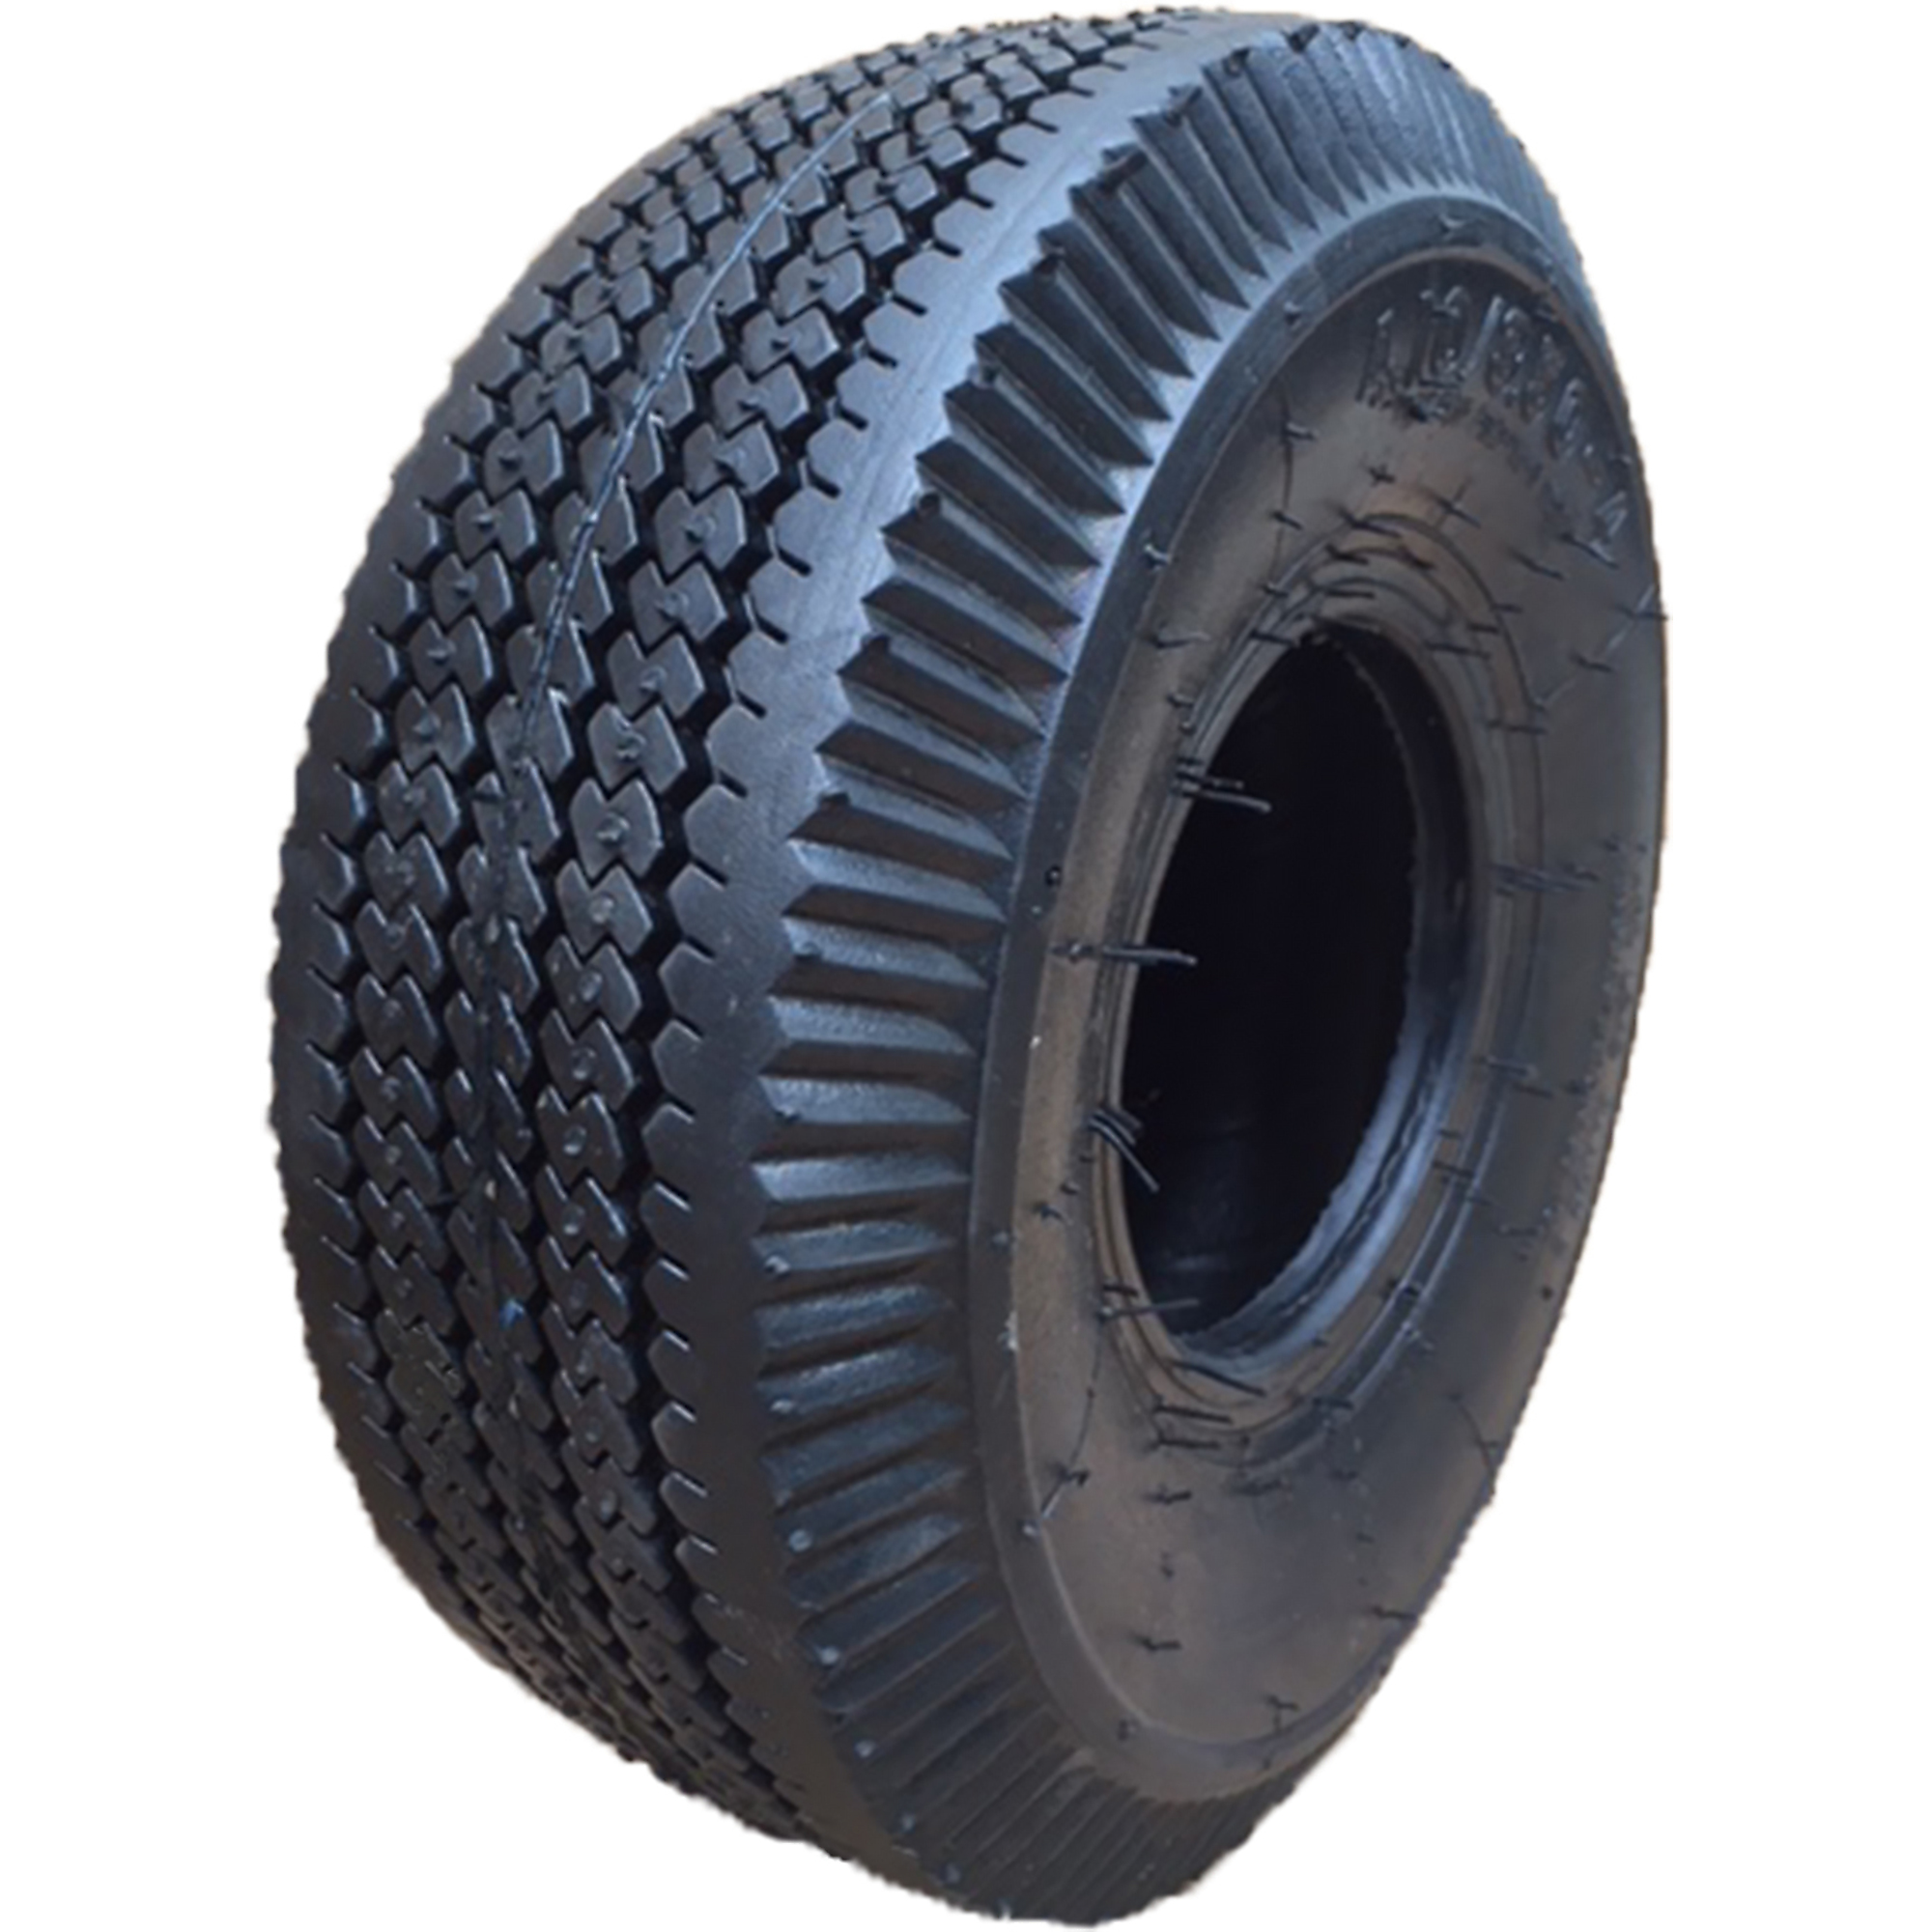 HI-RUN, Wheel Barrow Tire, Sawtooth, Tire Size 5.30/4.50-6 Load Range Rating C, Model WD1306